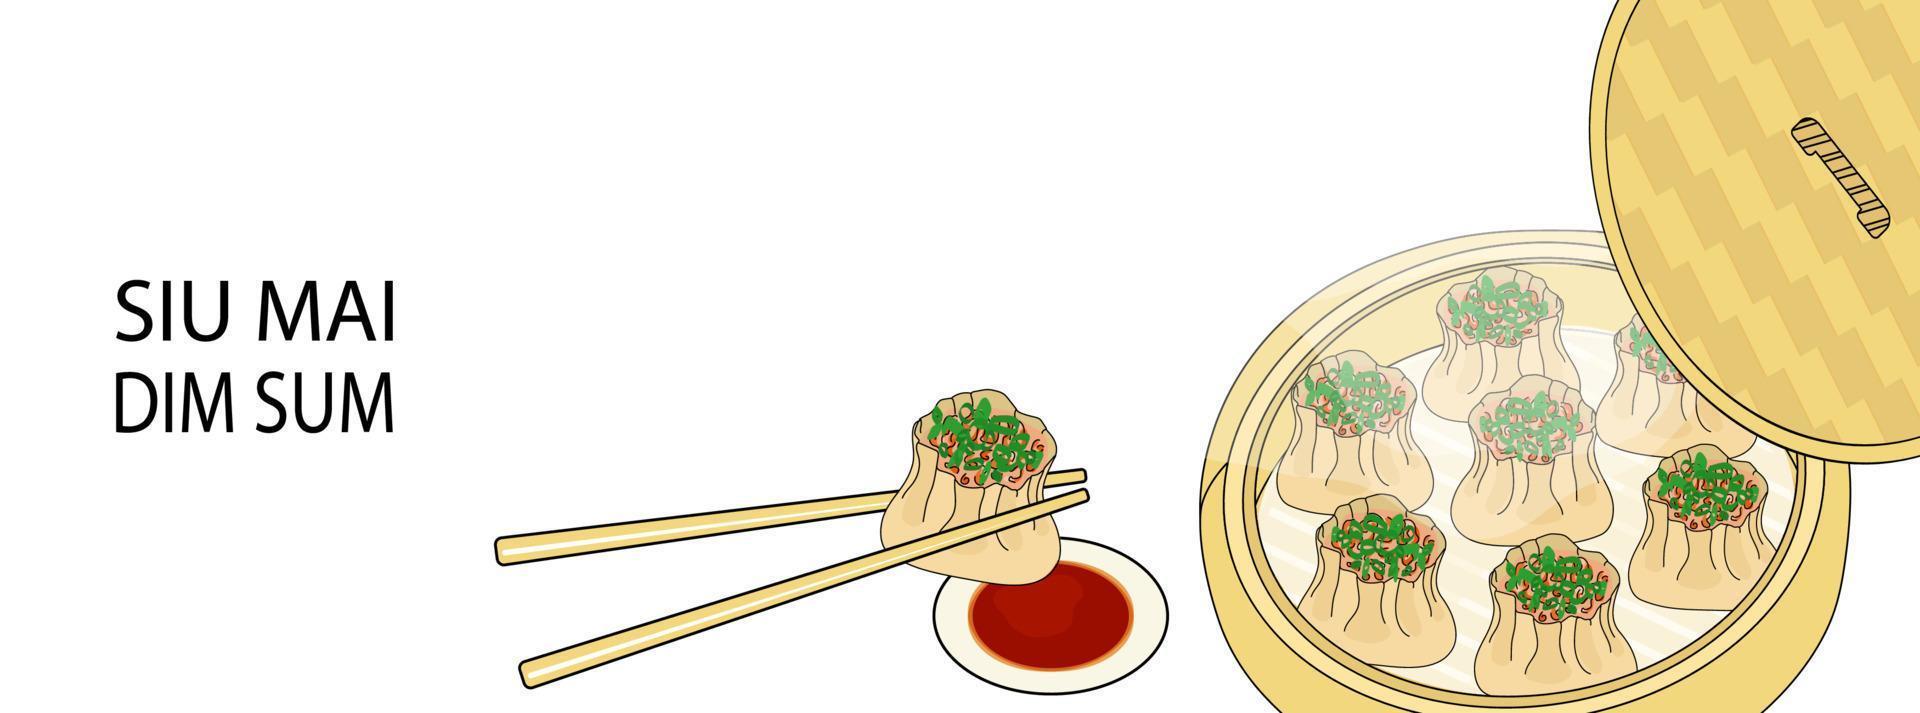 Siu mai dim sum steamed dumplings background vector illustration